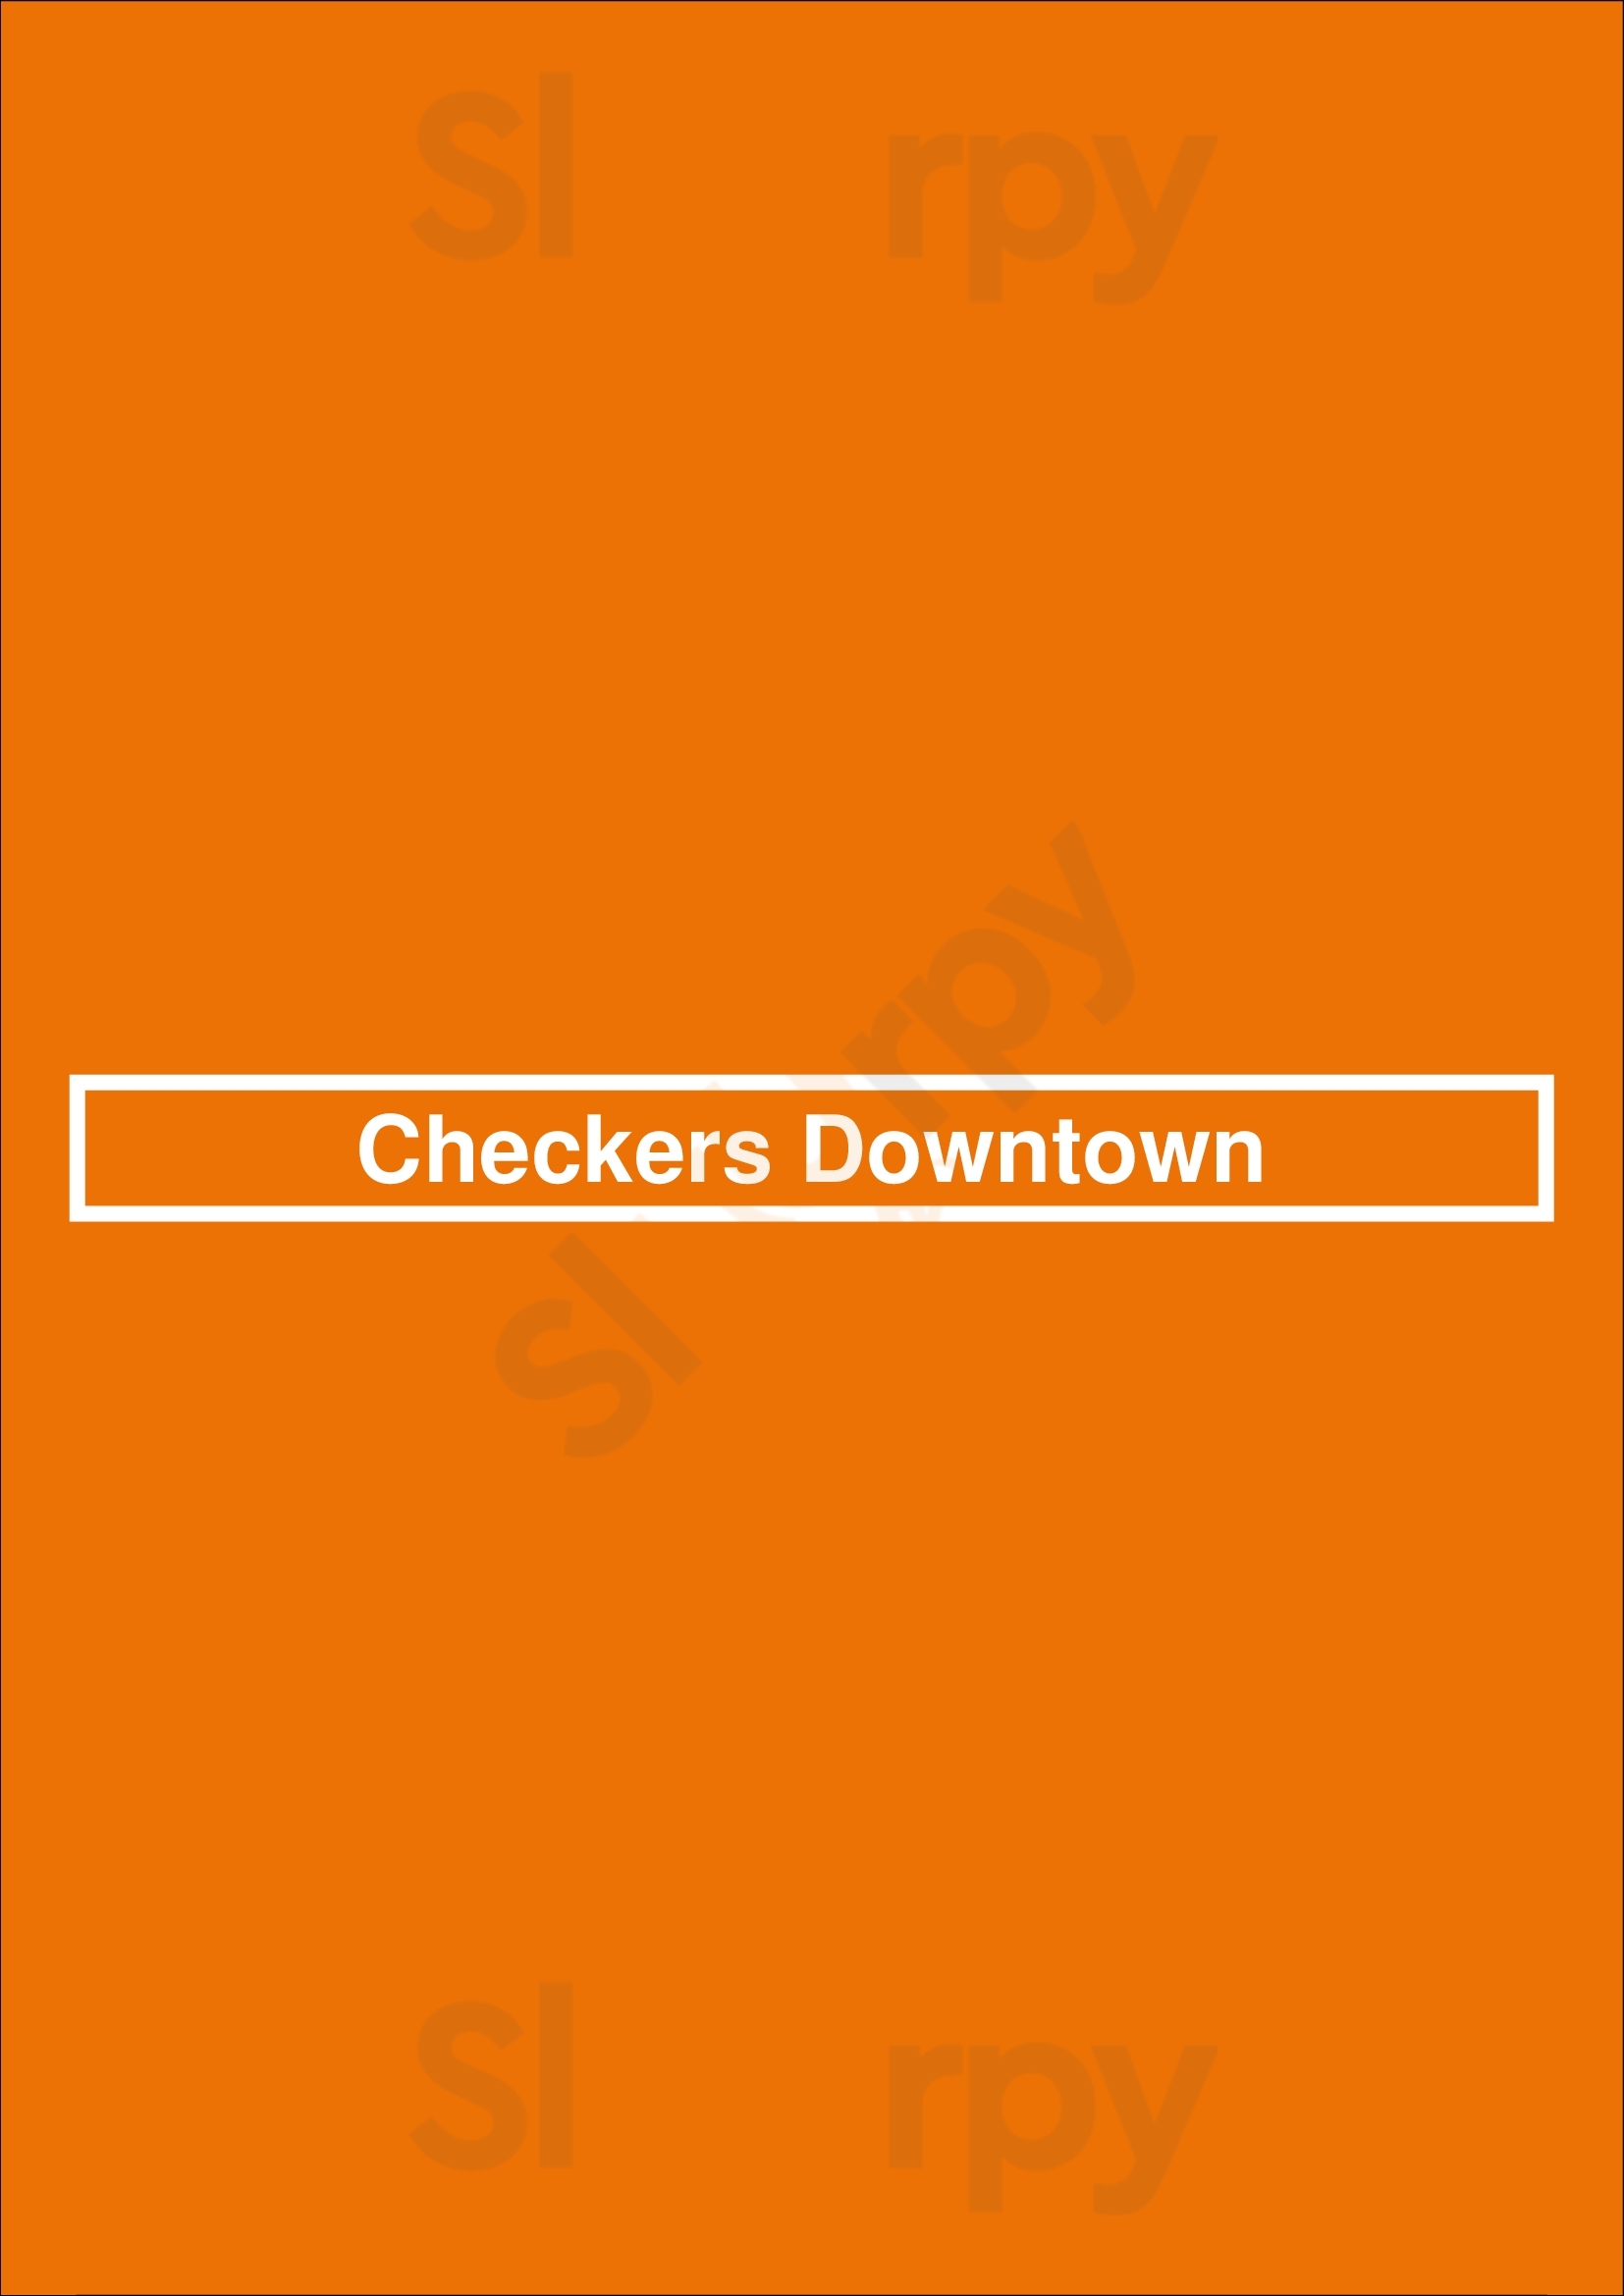 Checkers Downtown Los Angeles Menu - 1